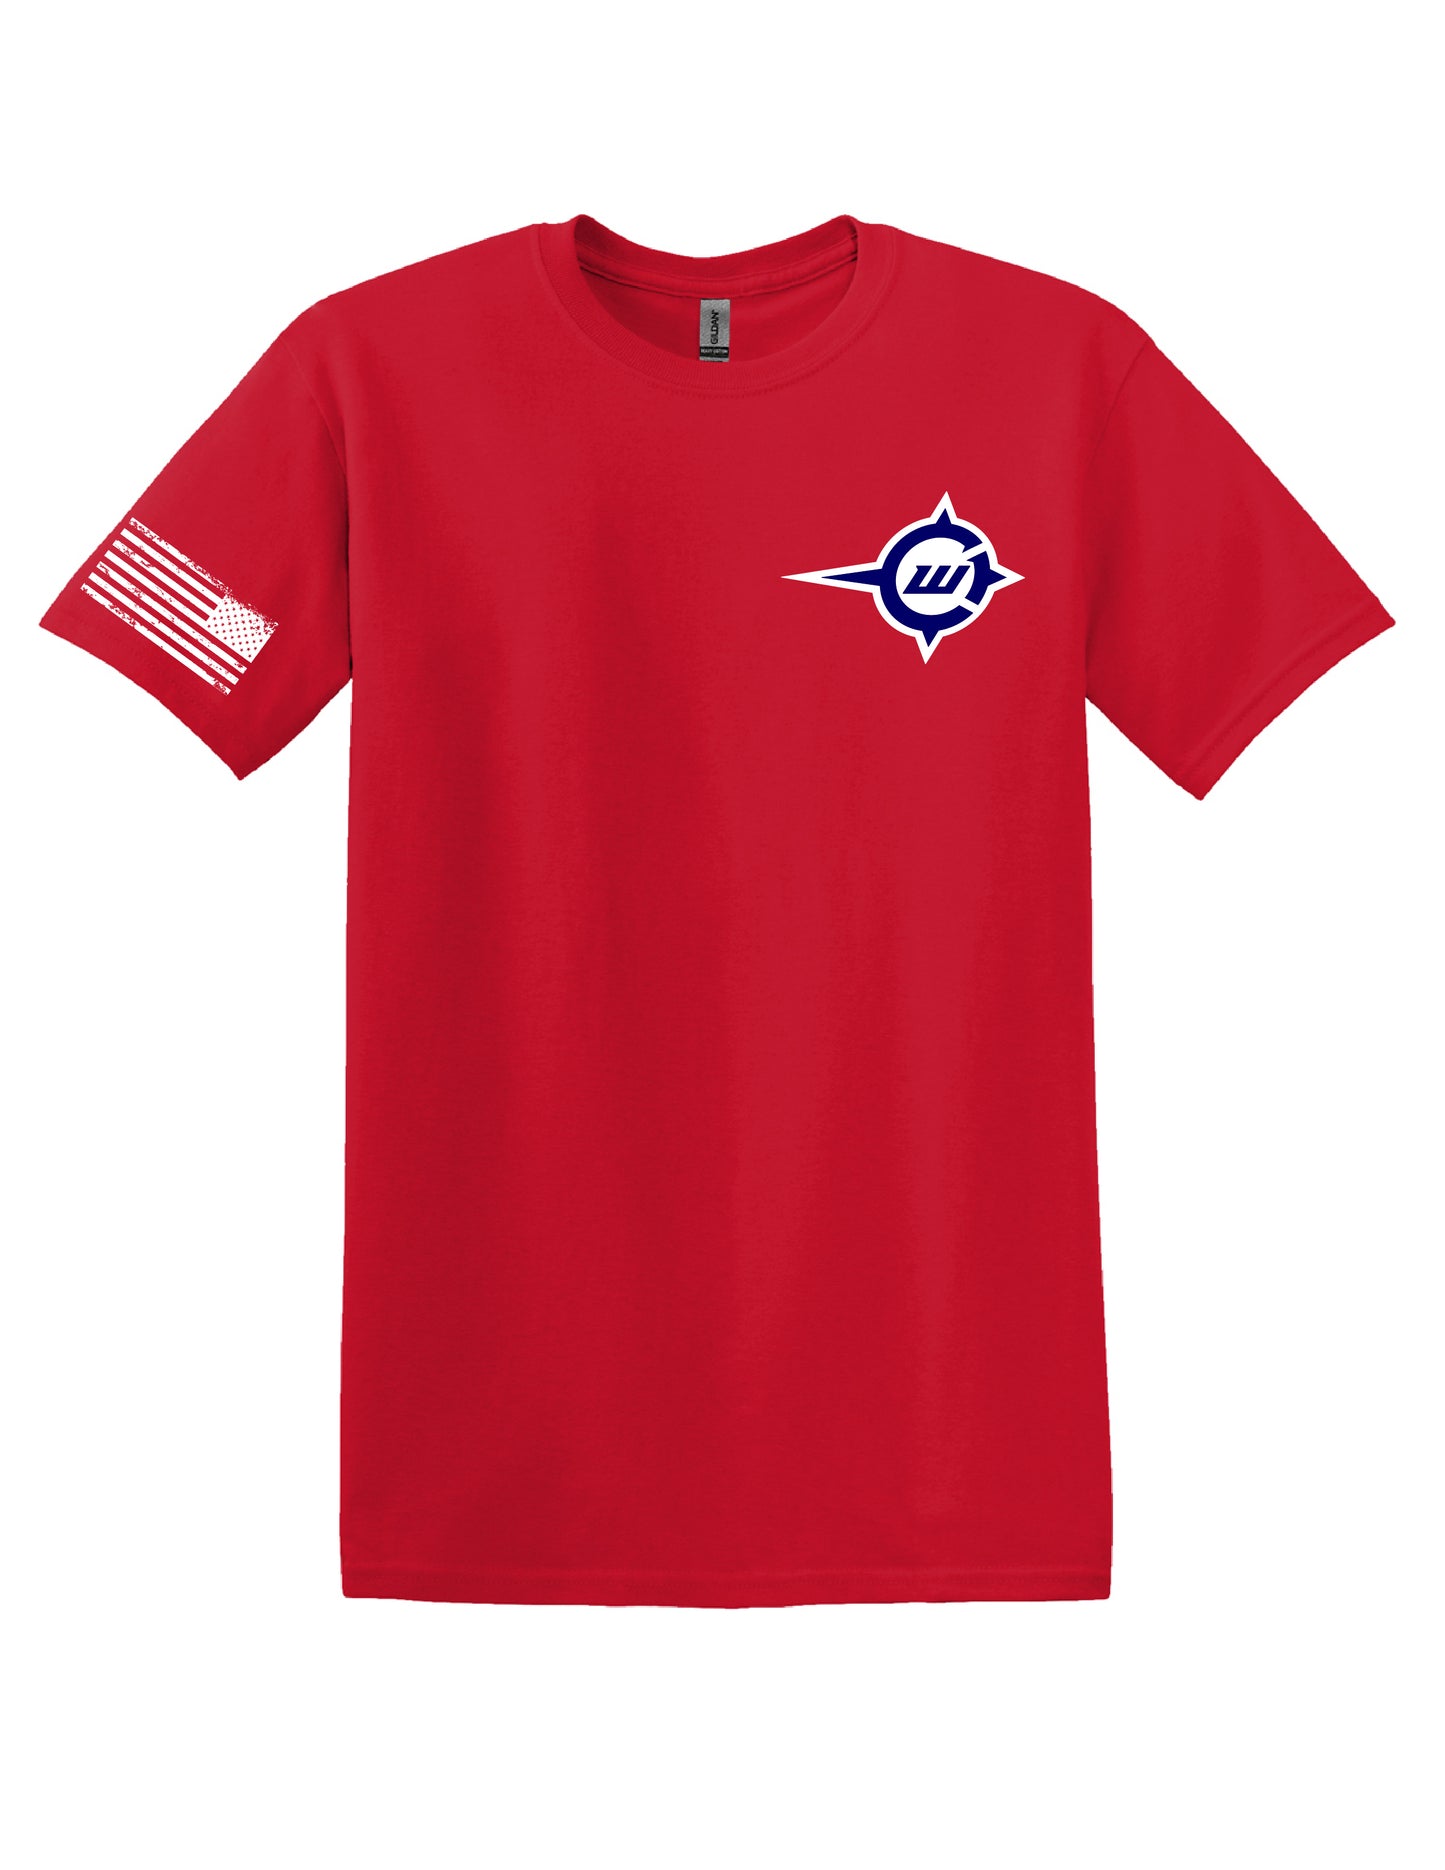 WCI Branded T-Shirts